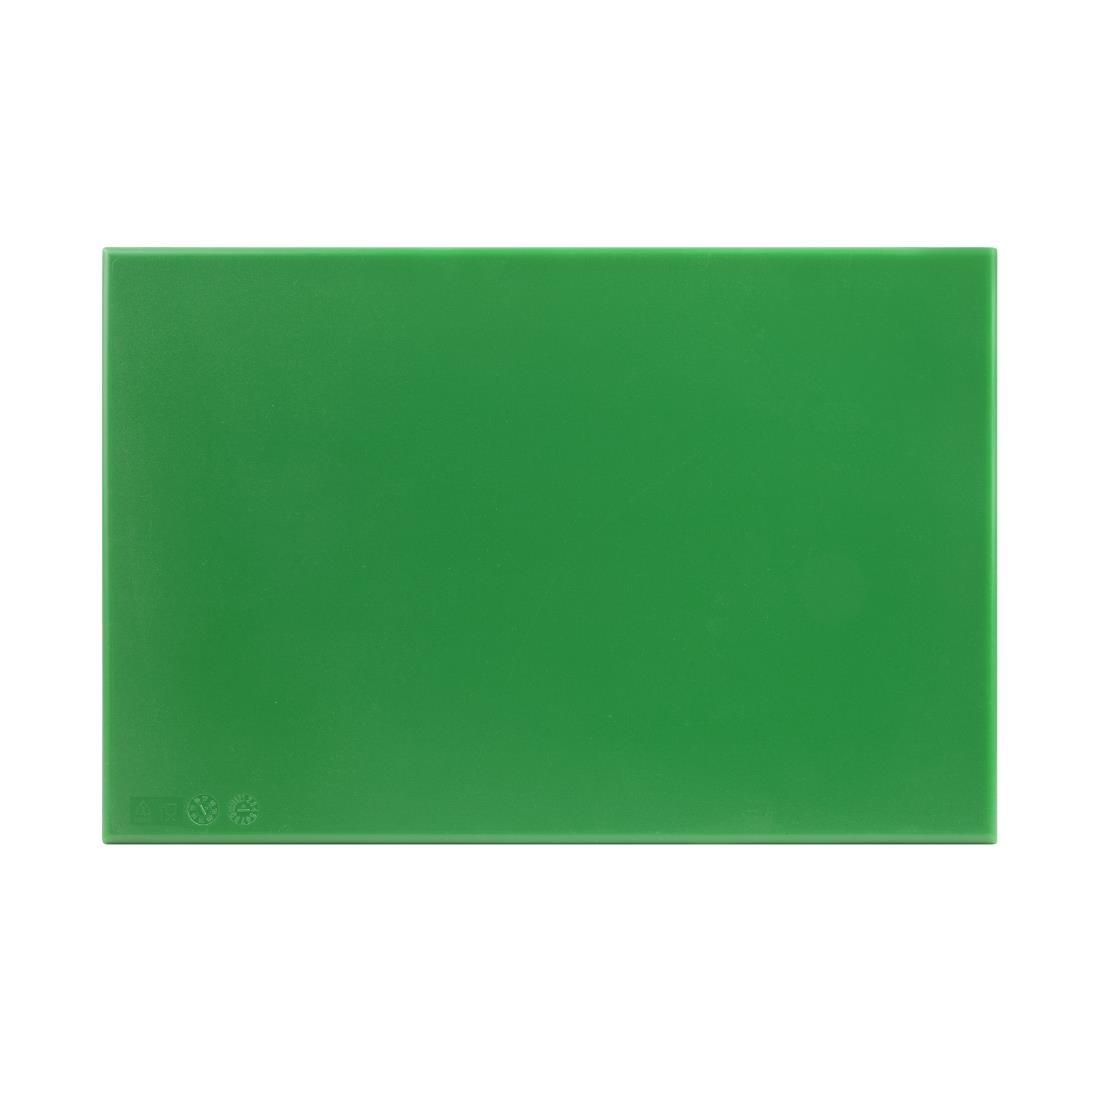 Hygiplas High Density Green Chopping Board Standard - J012  - 2